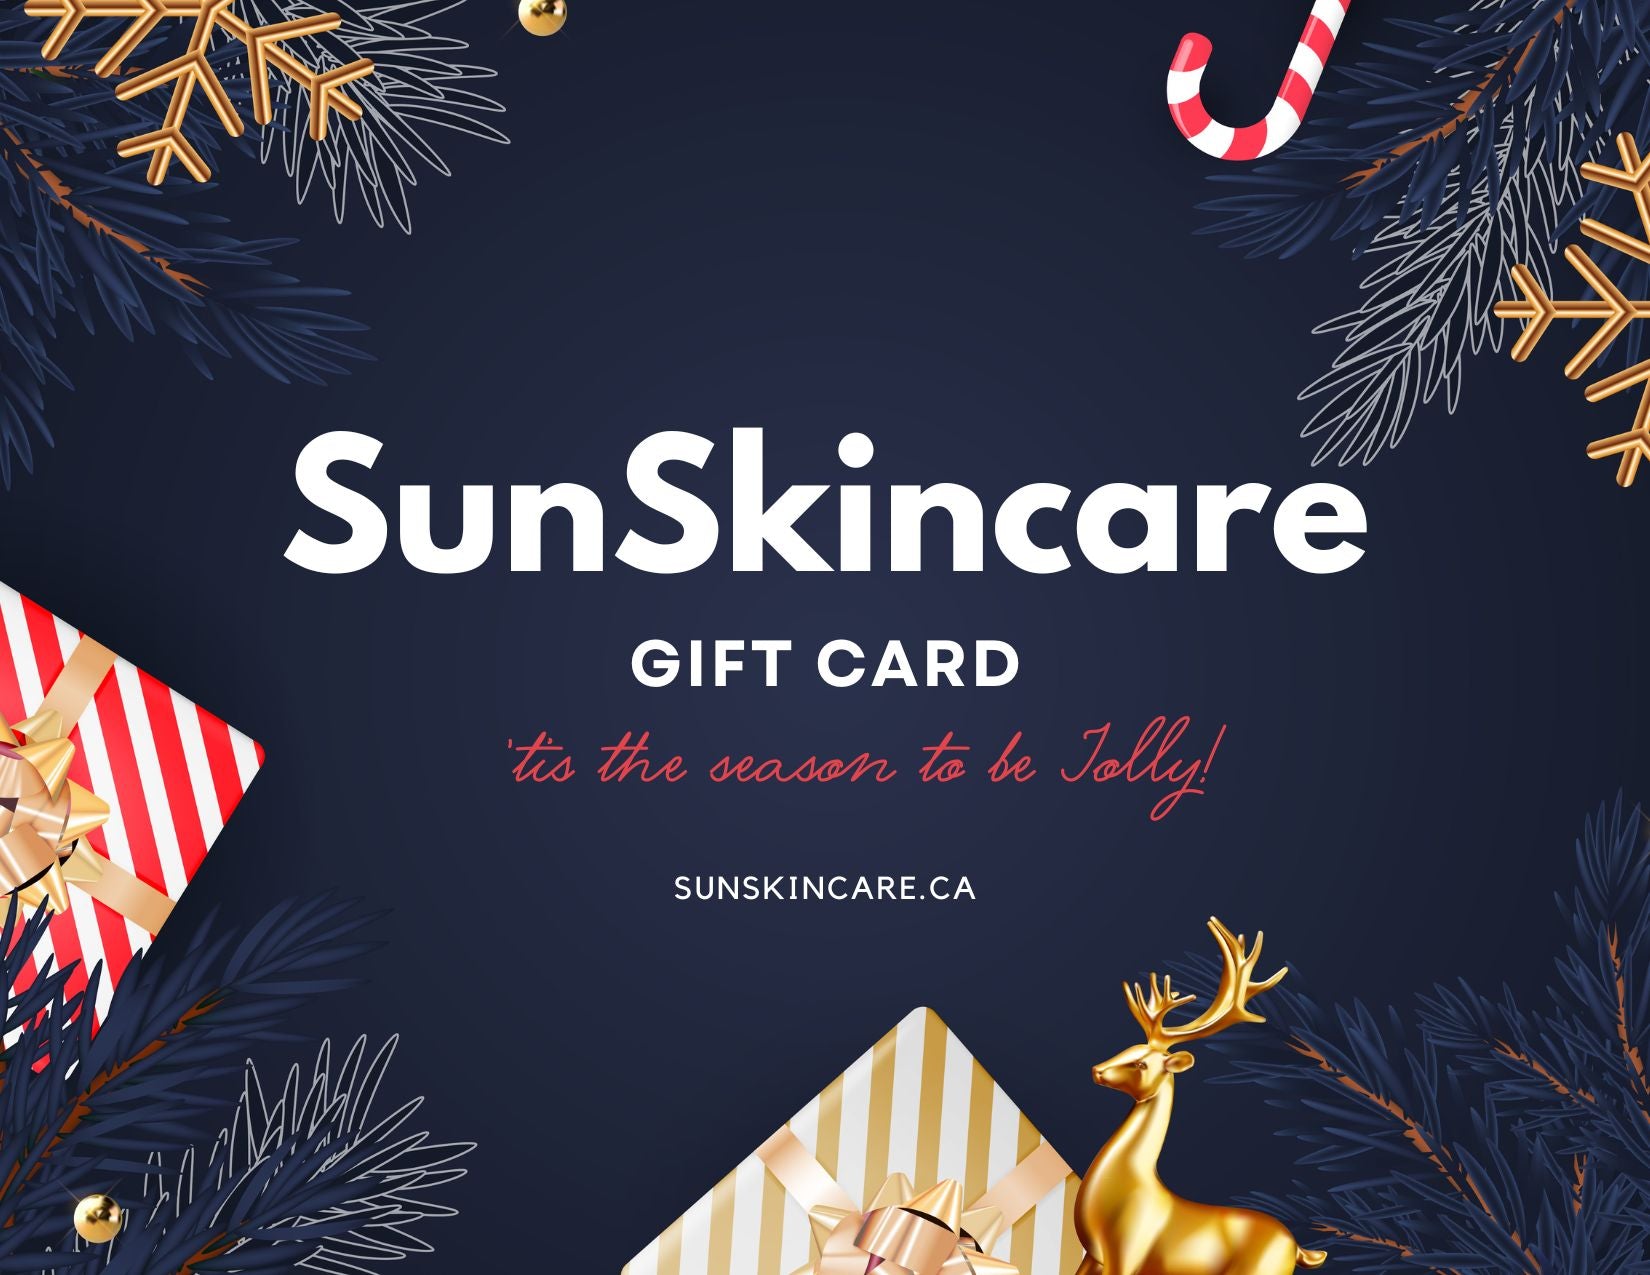 SunSkincare Holiday Gift Card